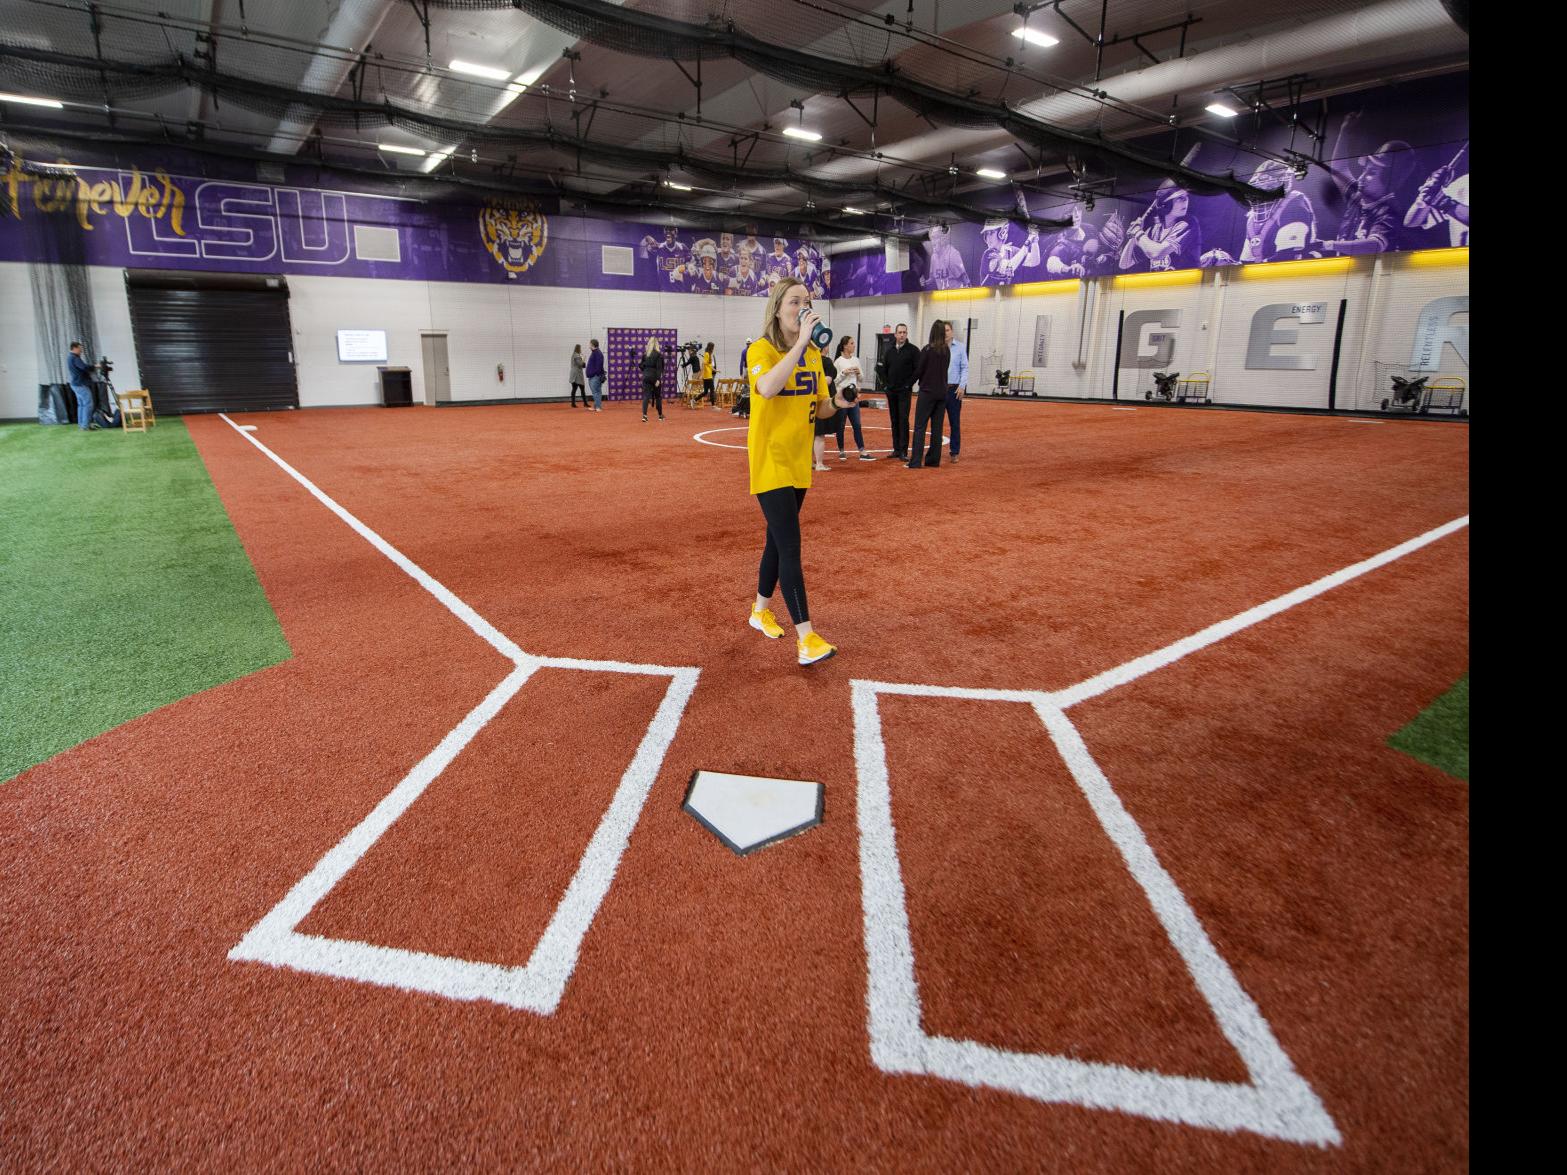 LSU softball opens season in new practice facility | LSU | theadvocate.com